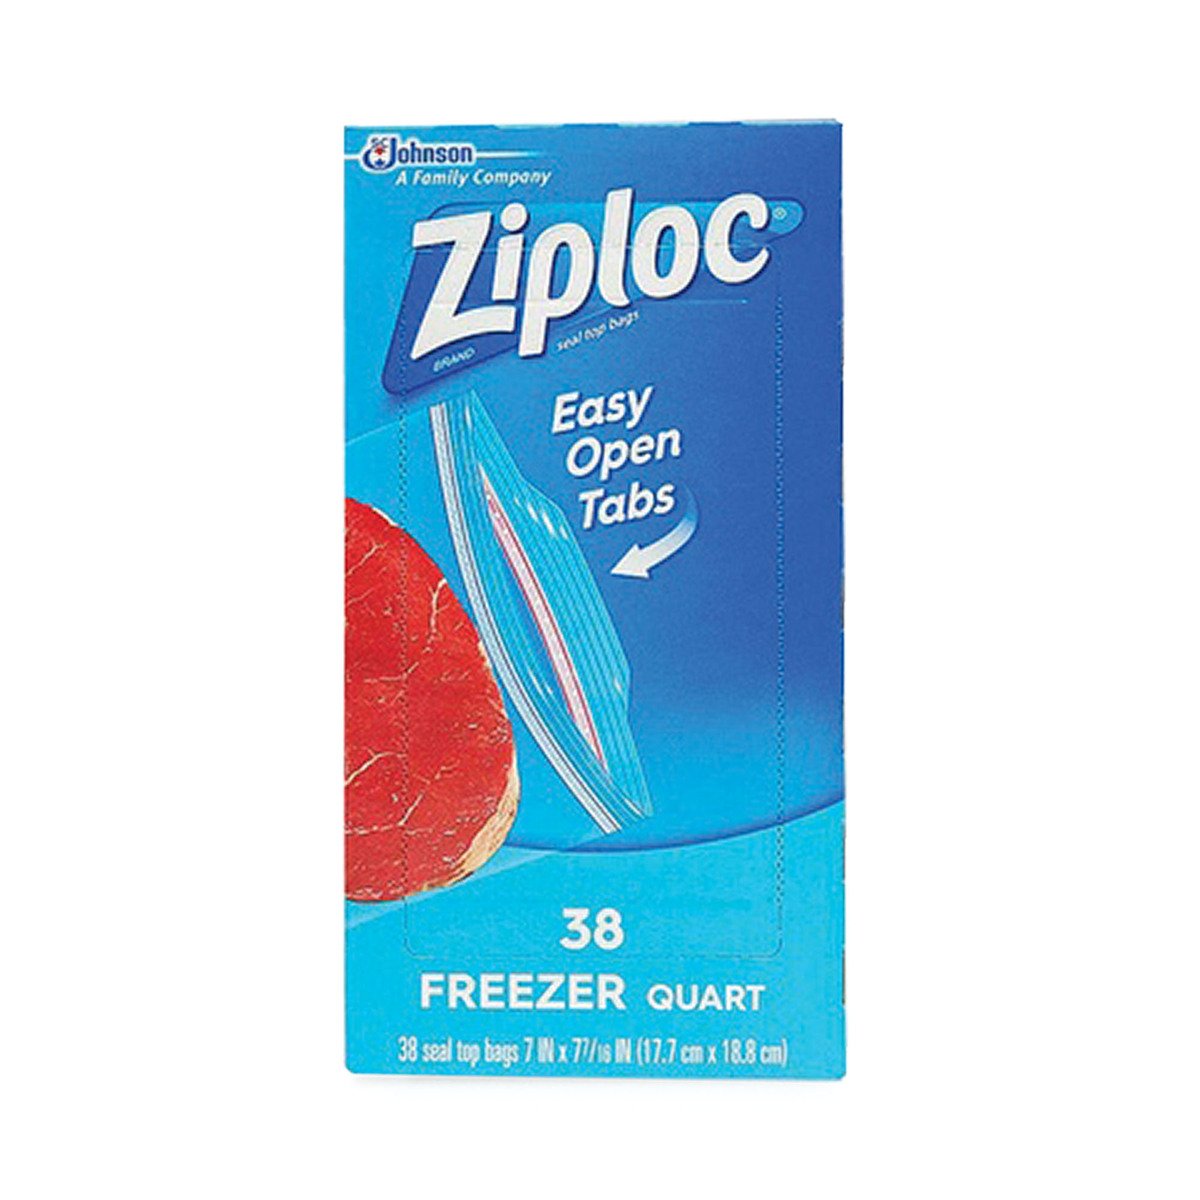 Ziploc Freezer Seal Top Bags Value Pack 2 x 38 pcs